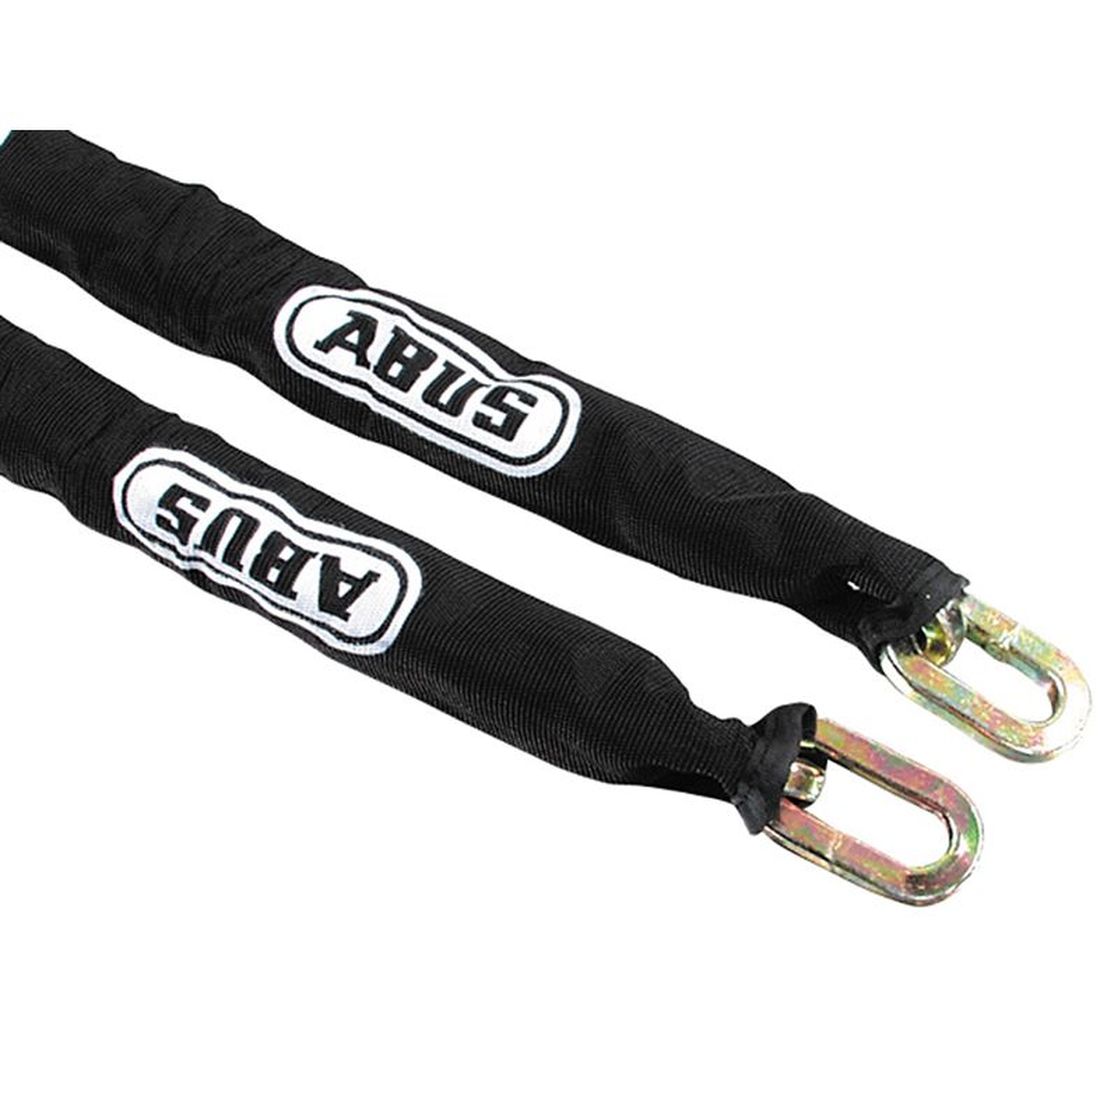 ABUS 10KS/140 Security Chain Length 140cm Link Diameter 10mm                         